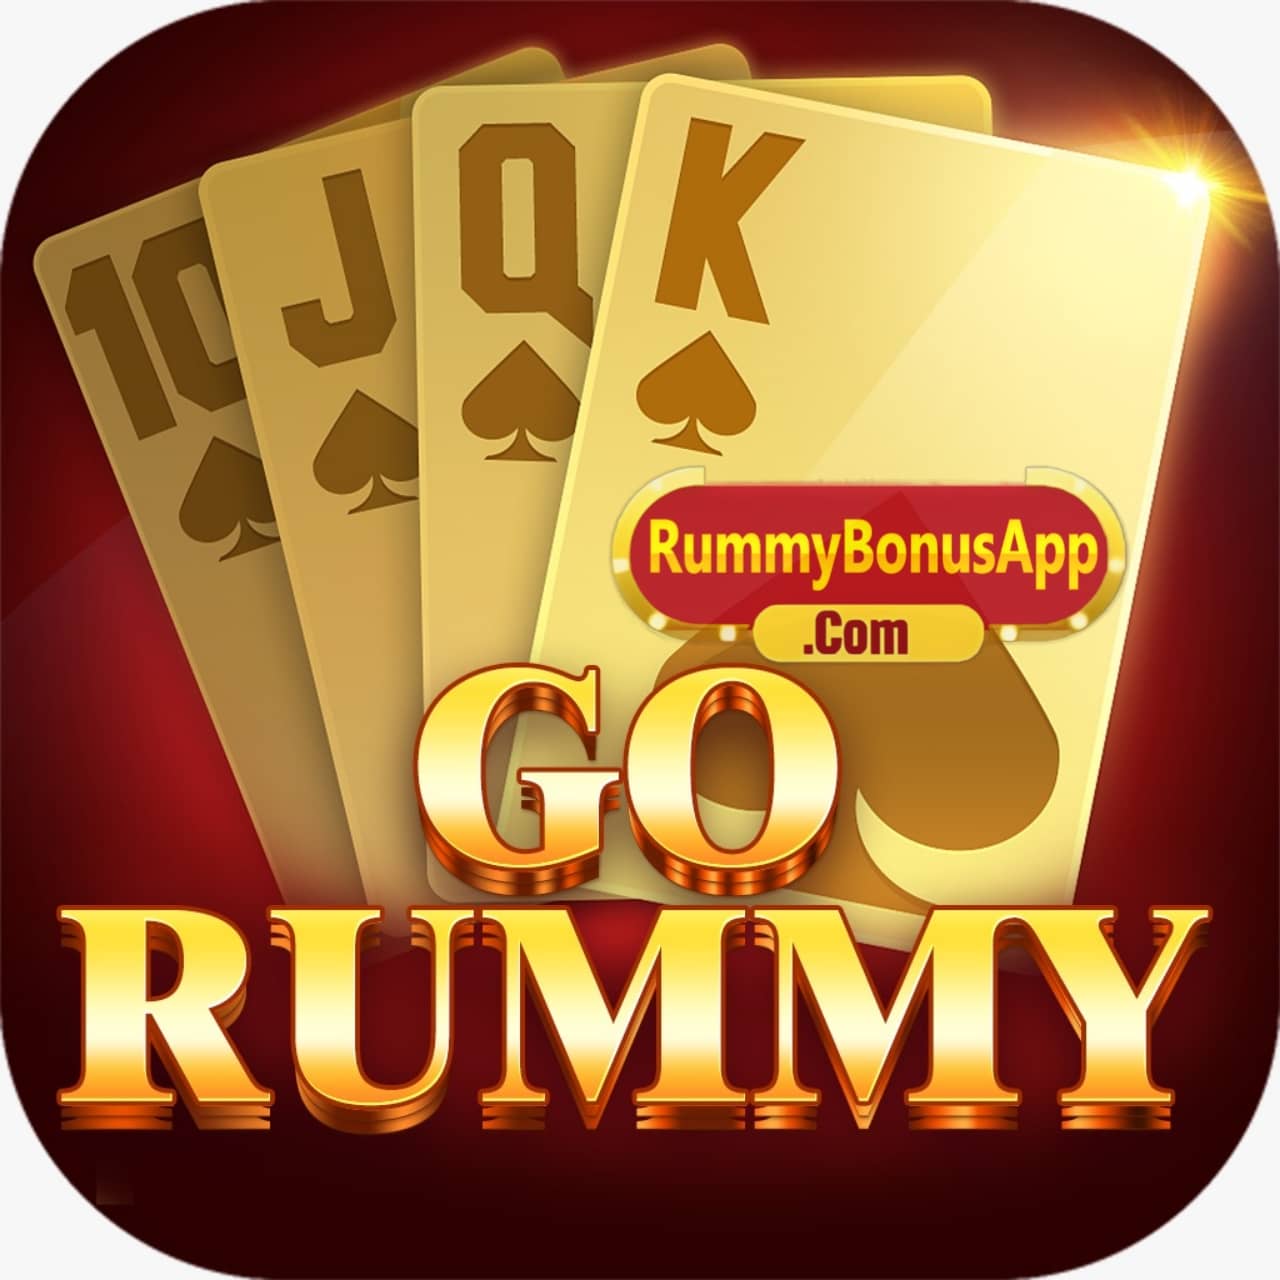 Go Rummy - Global Game App - Global Game Apps - GlobalGameDownloads